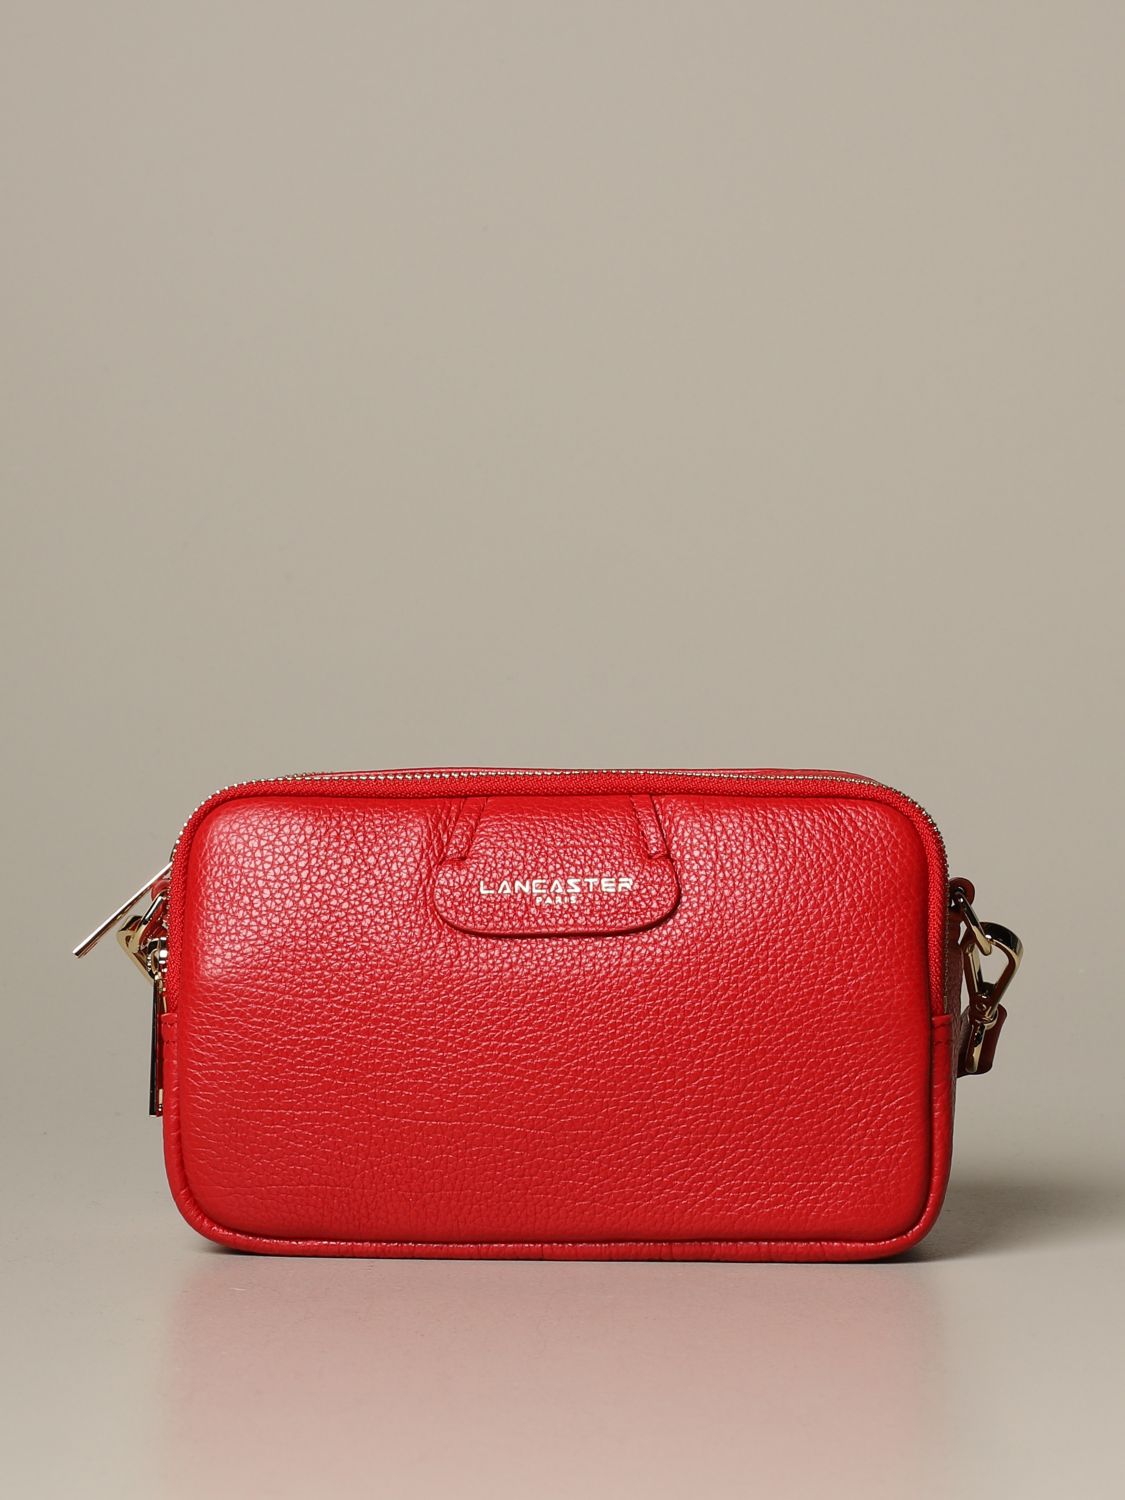 Lancaster Paris Outlet: brick bag in textured leather - Red | Lancaster ...